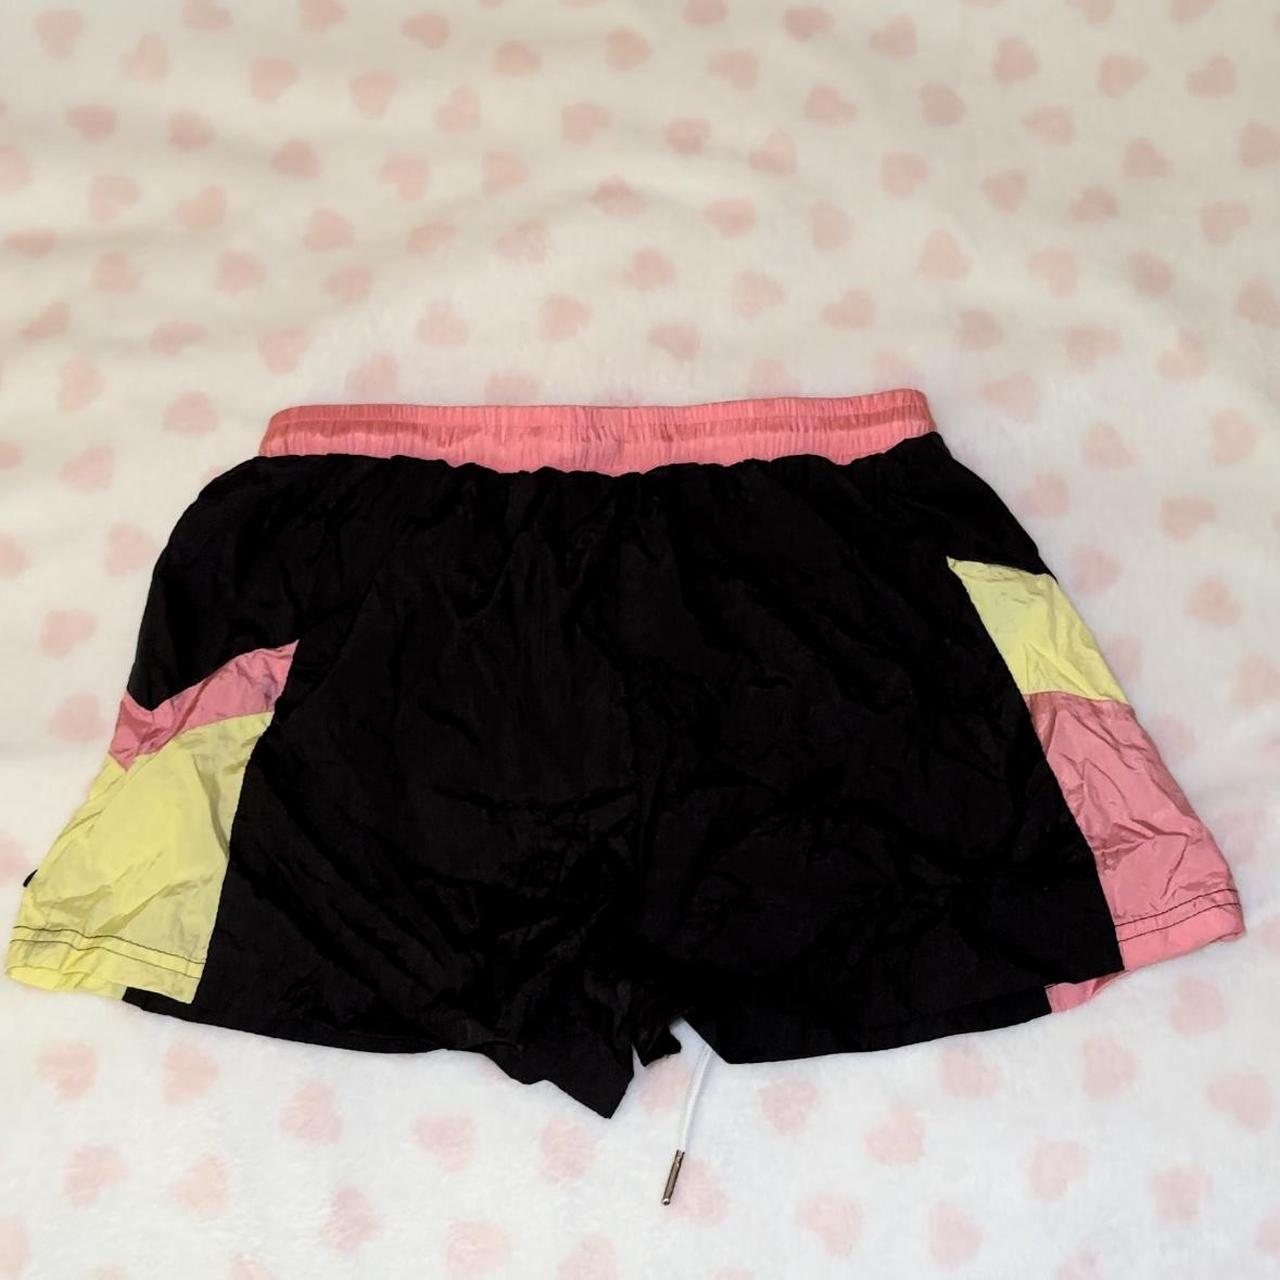 Ellesse Women's Black and Pink Shorts (2)